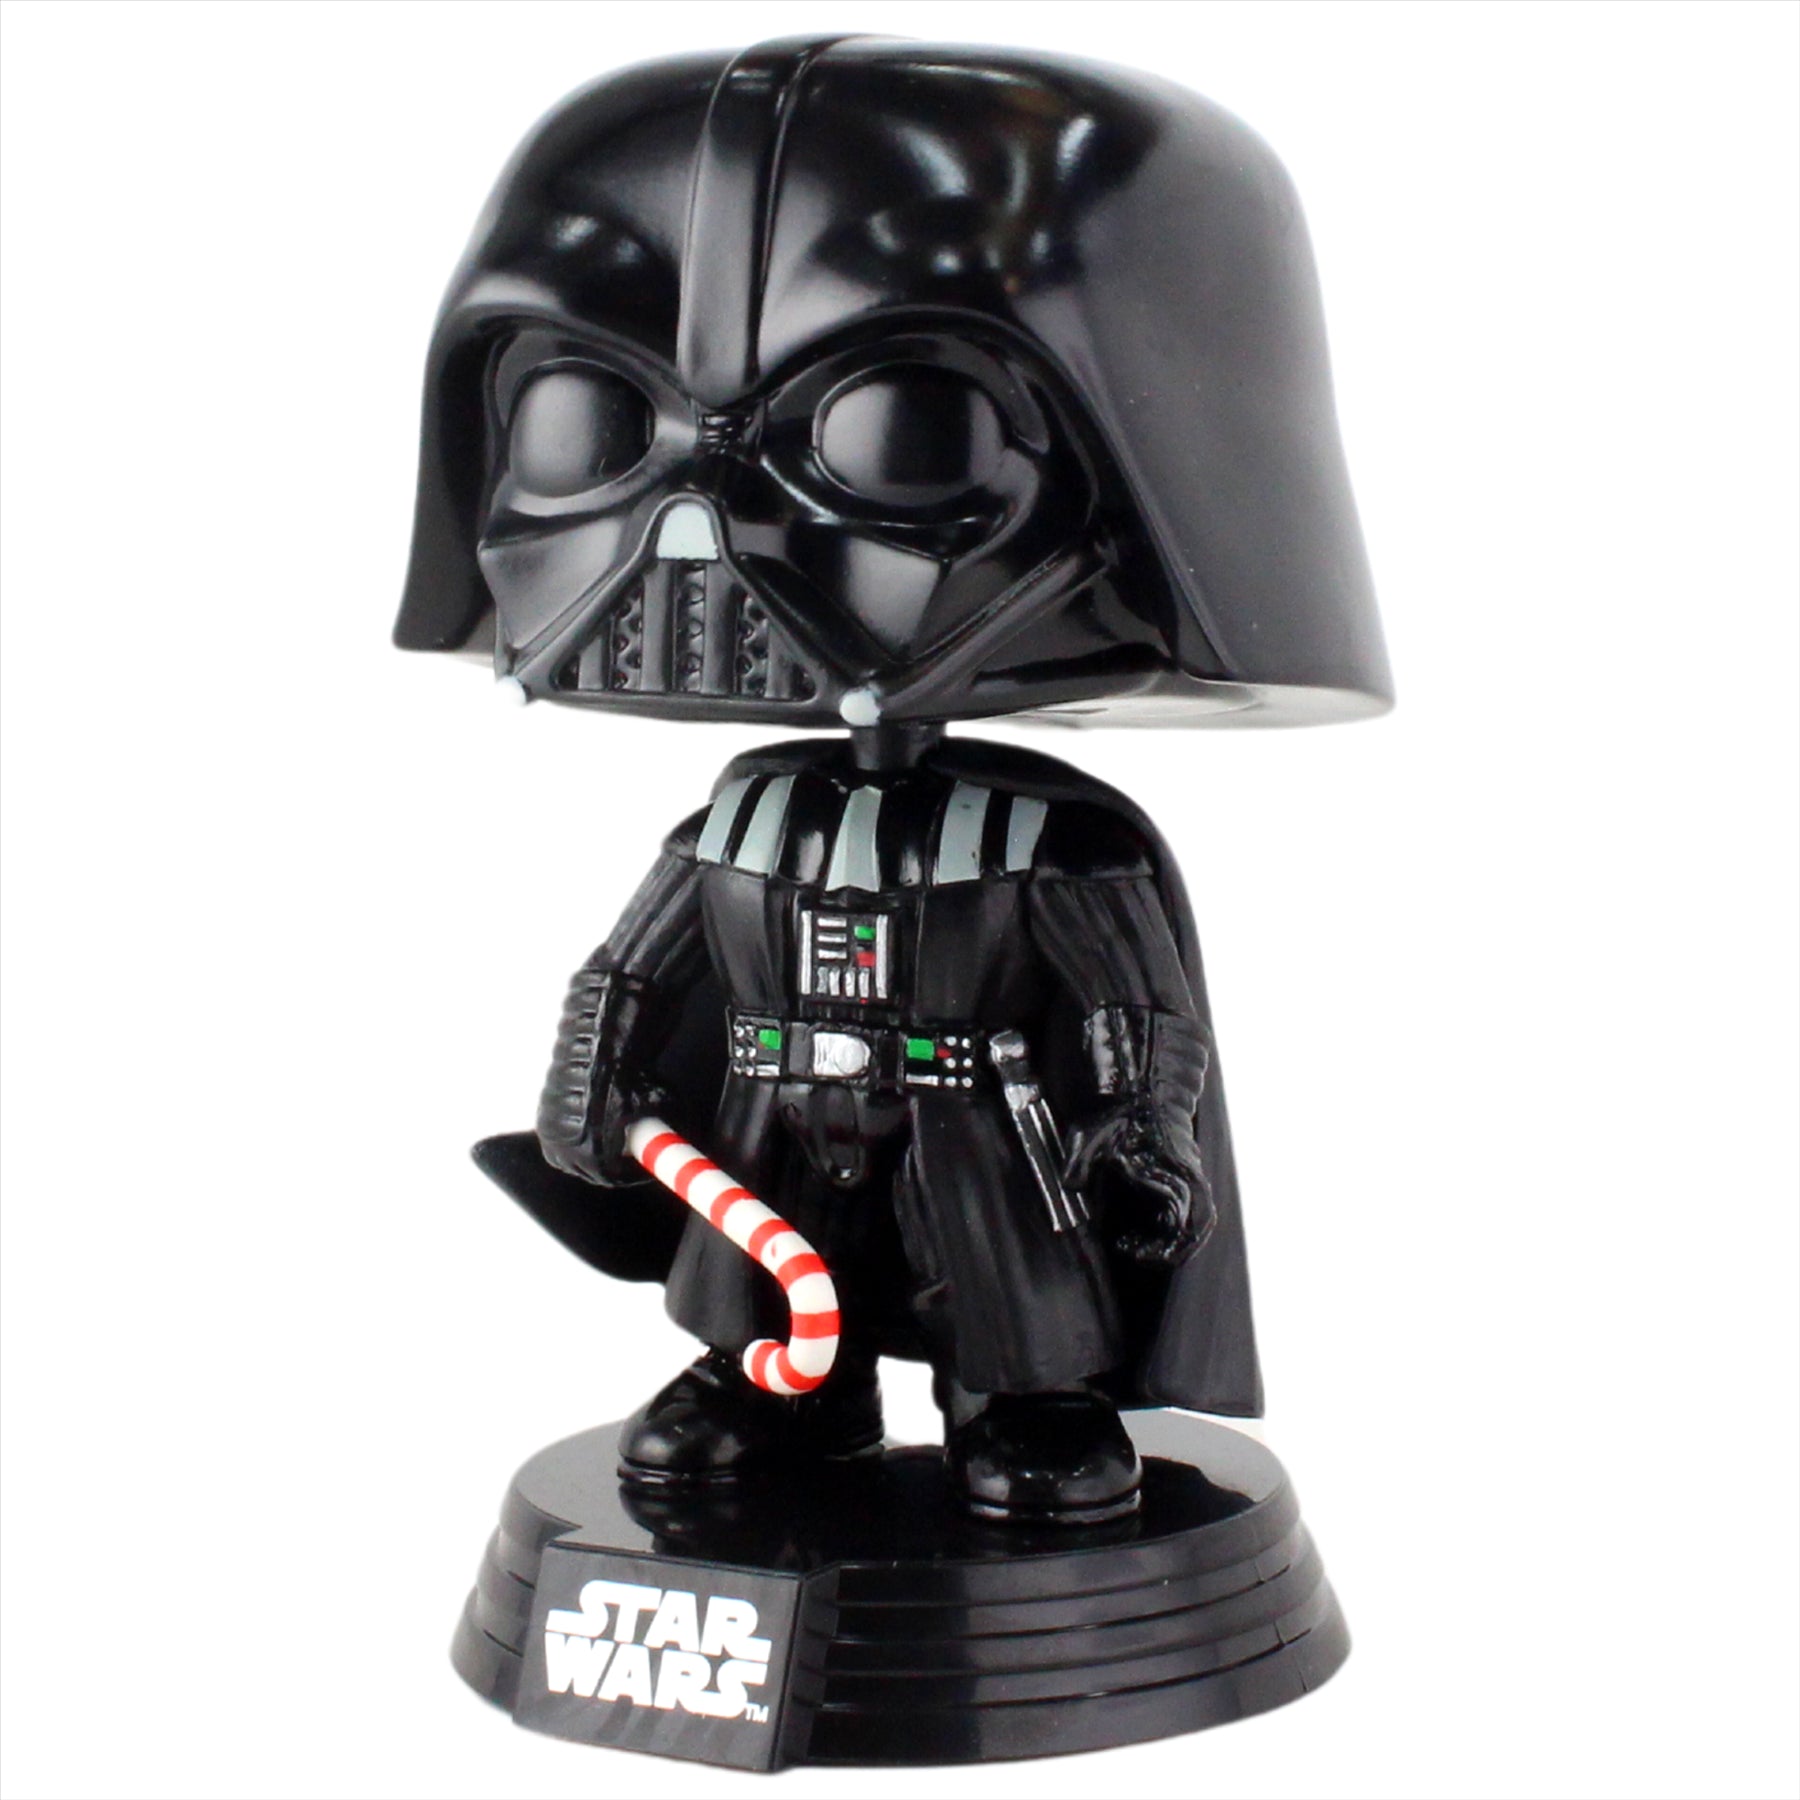 Star Wars - Collectors 4 Piece Set in Gift Box - Far Far Away 350ml Ceramic Mug, Rebel Alliance Baseball Cap, Darth Vader POP & Rebel Alliance T-Shirt 2XL - Toptoys2u